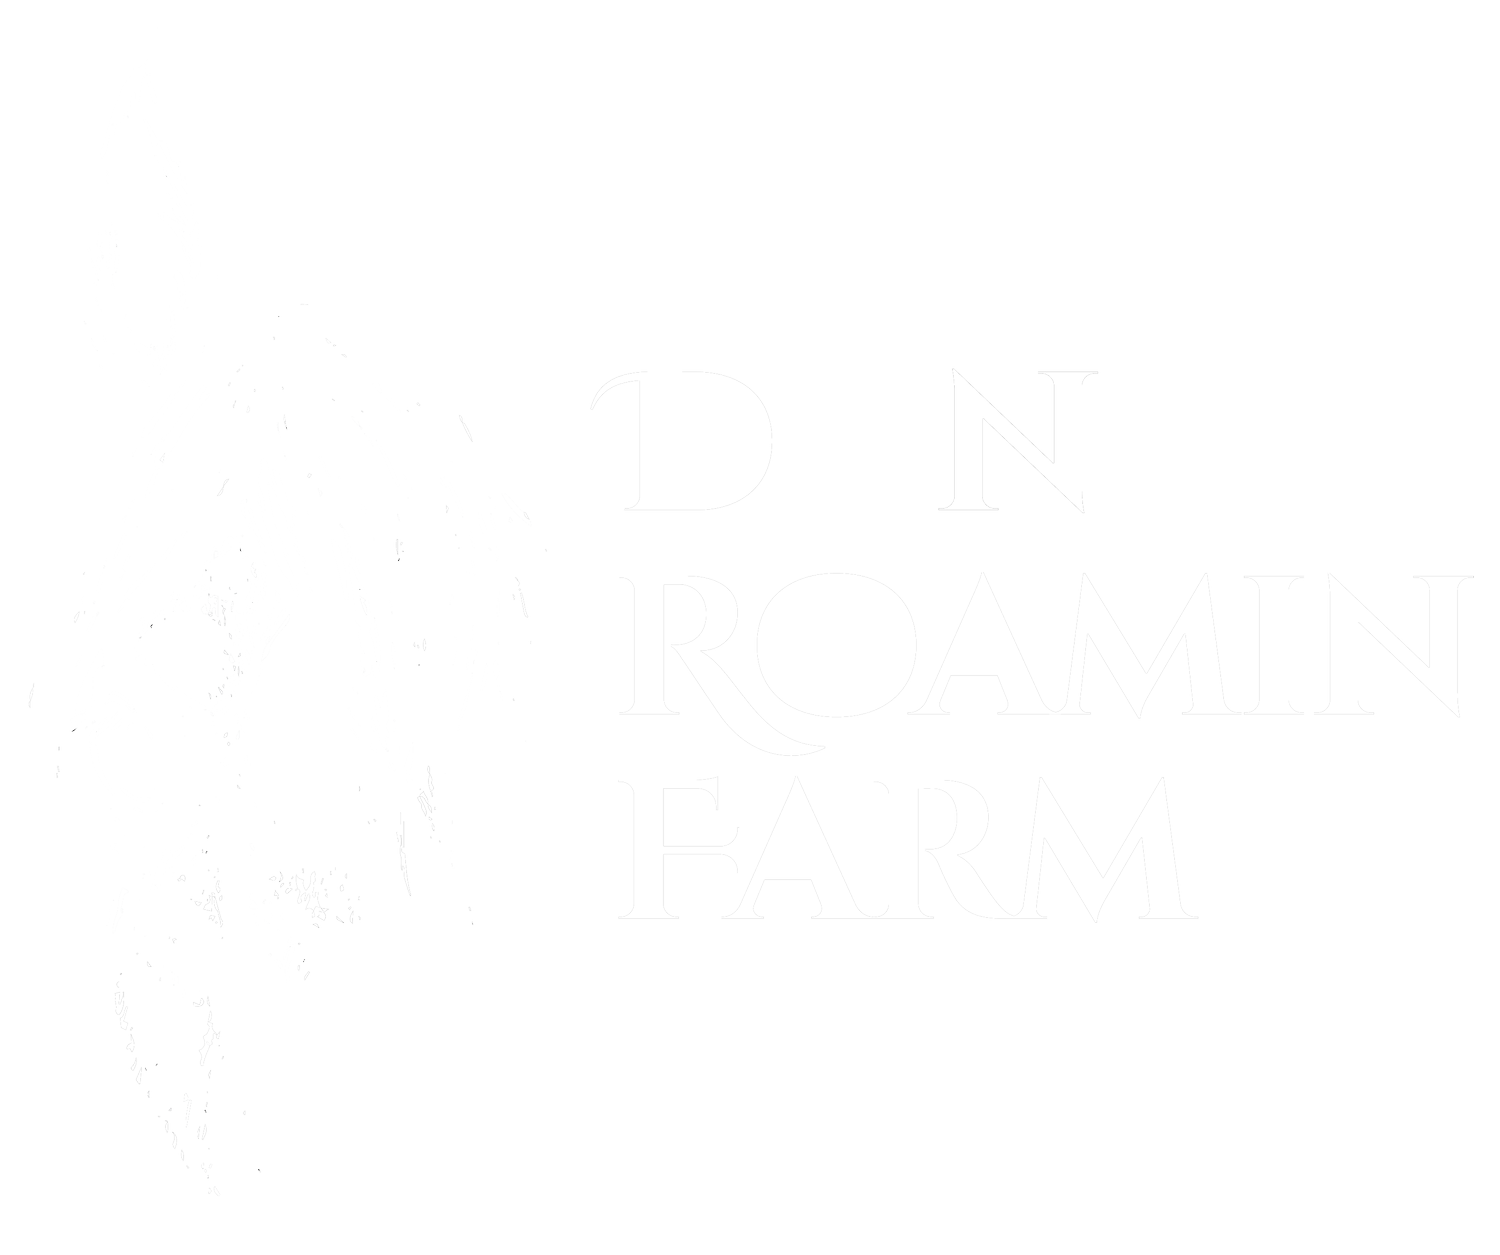 Dun Roamin Farm